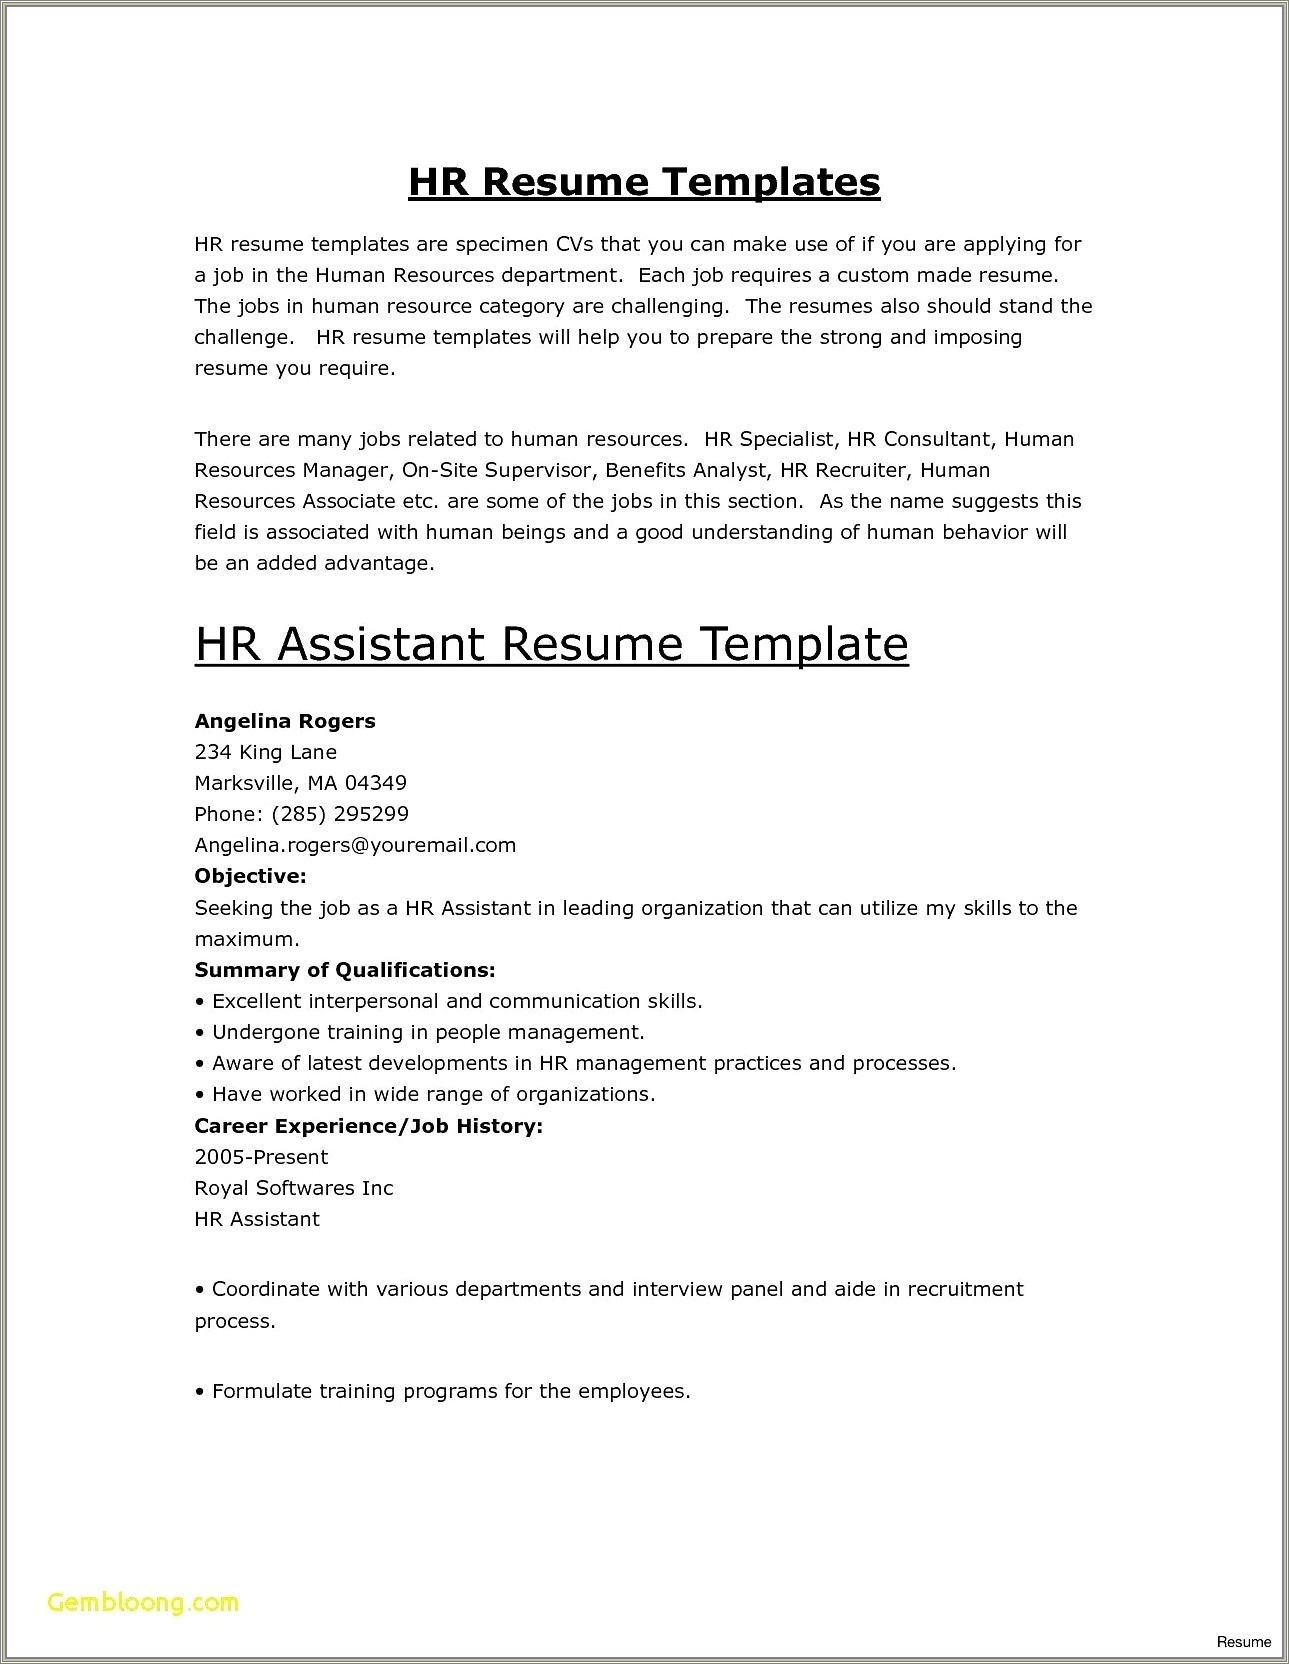 Best Rated Resume Services Tucson Az